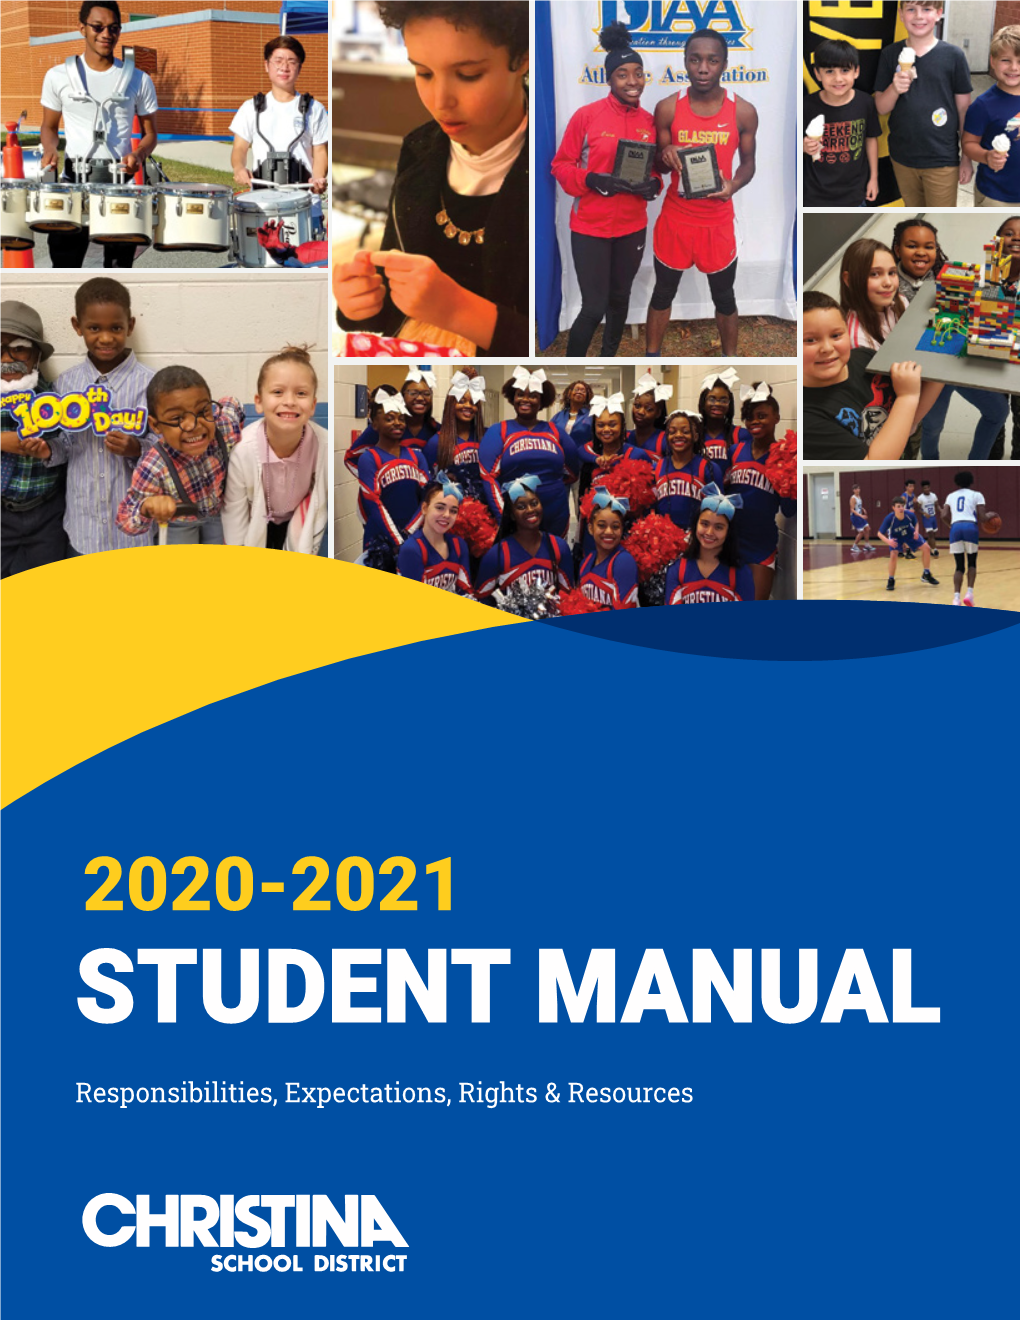 2020-2021 Student Manual